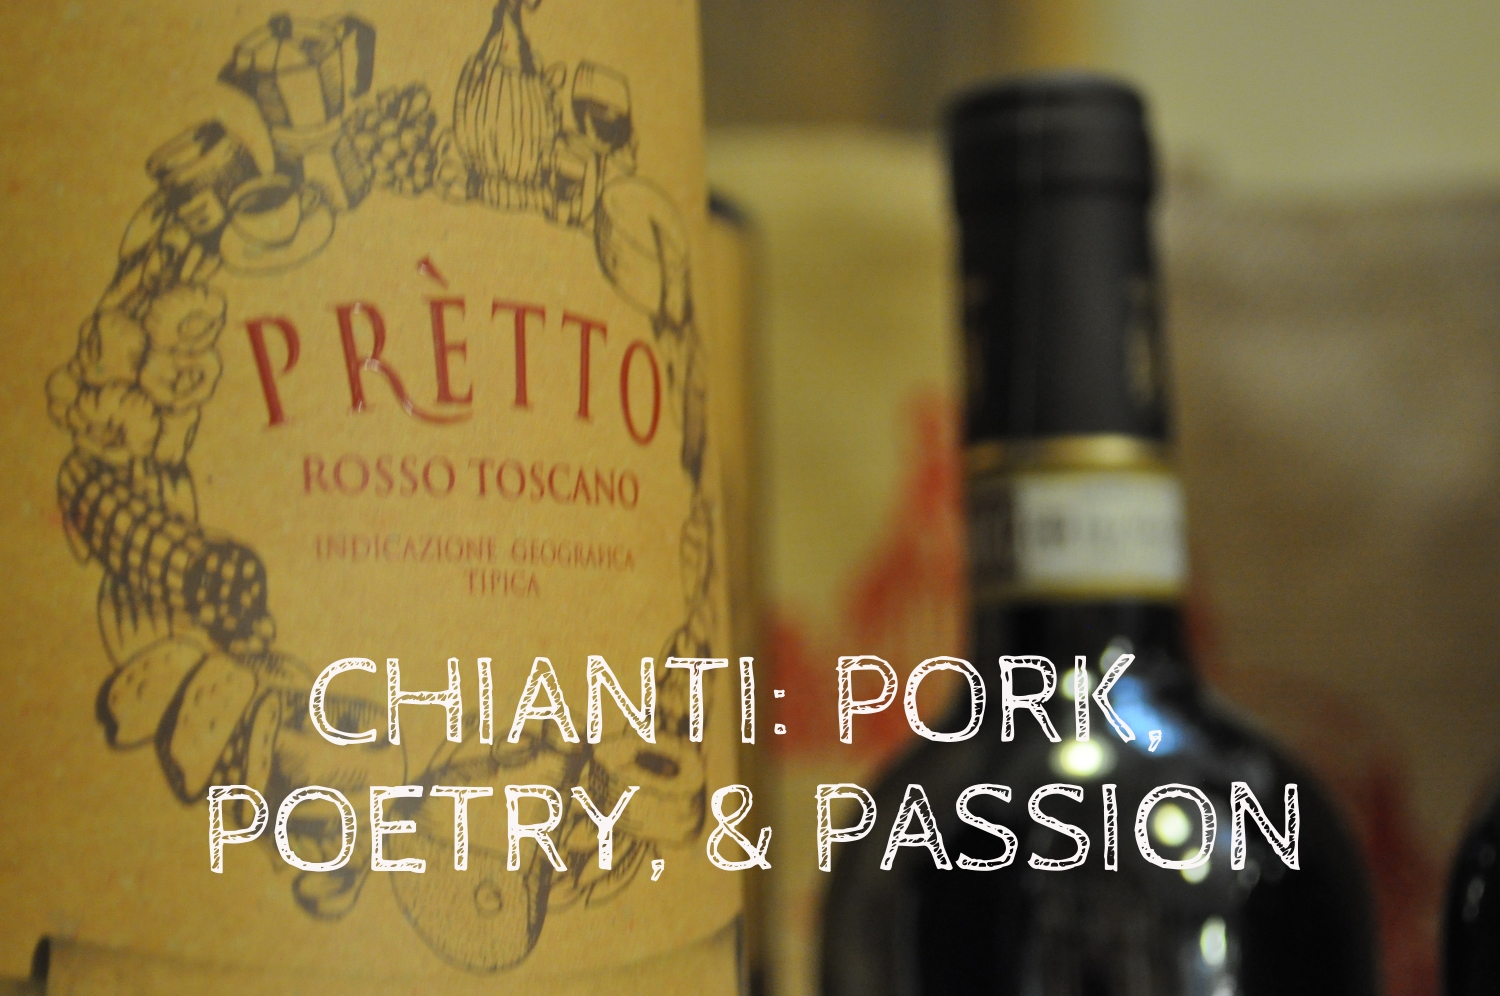 Chianti: Pork, Poetry, & Passion